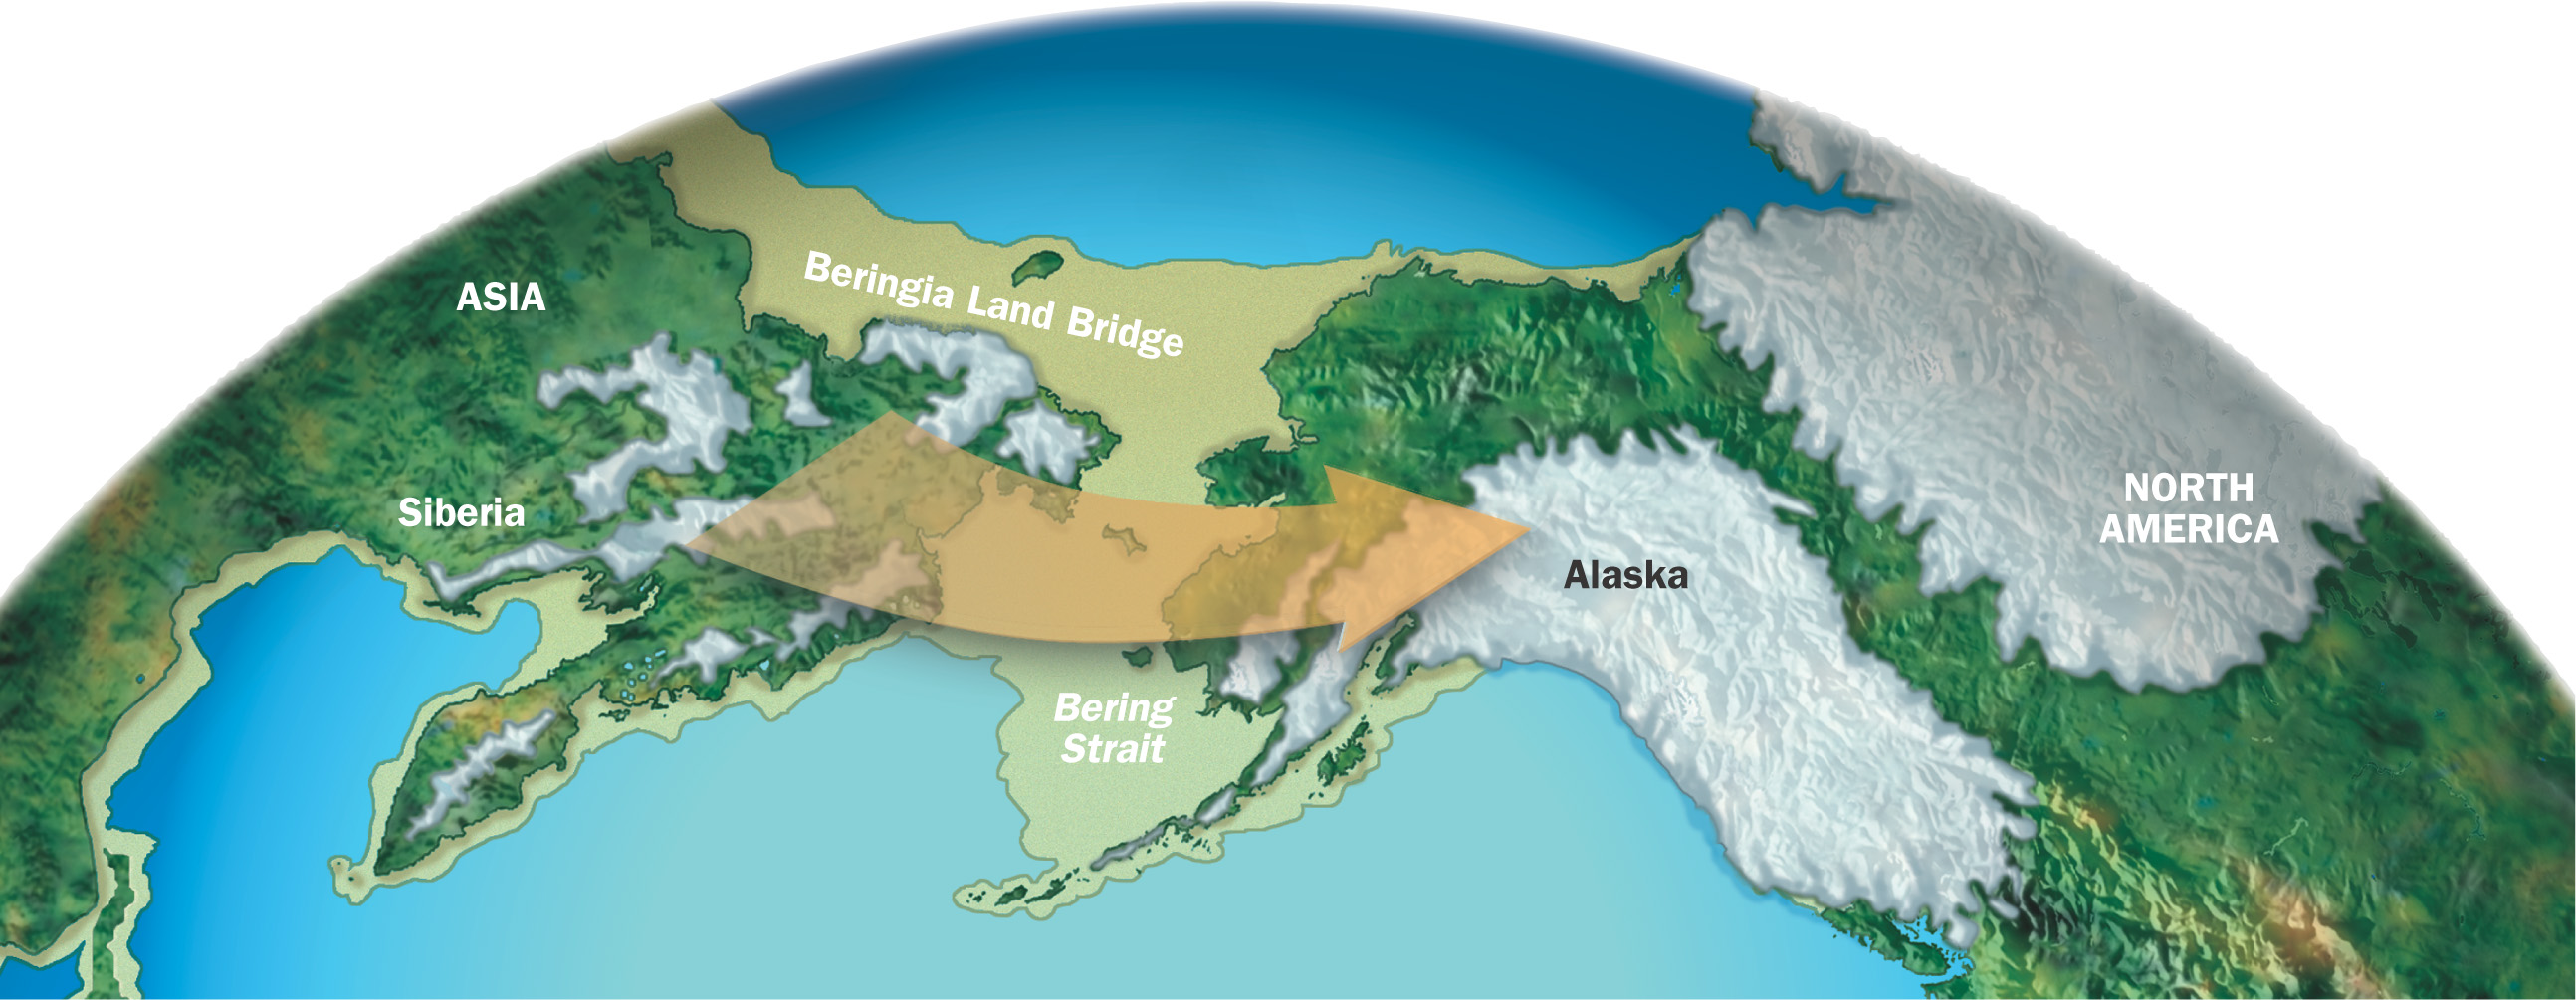 Map shows the Beringia Land Bridge connecting Siberia and Alaska.